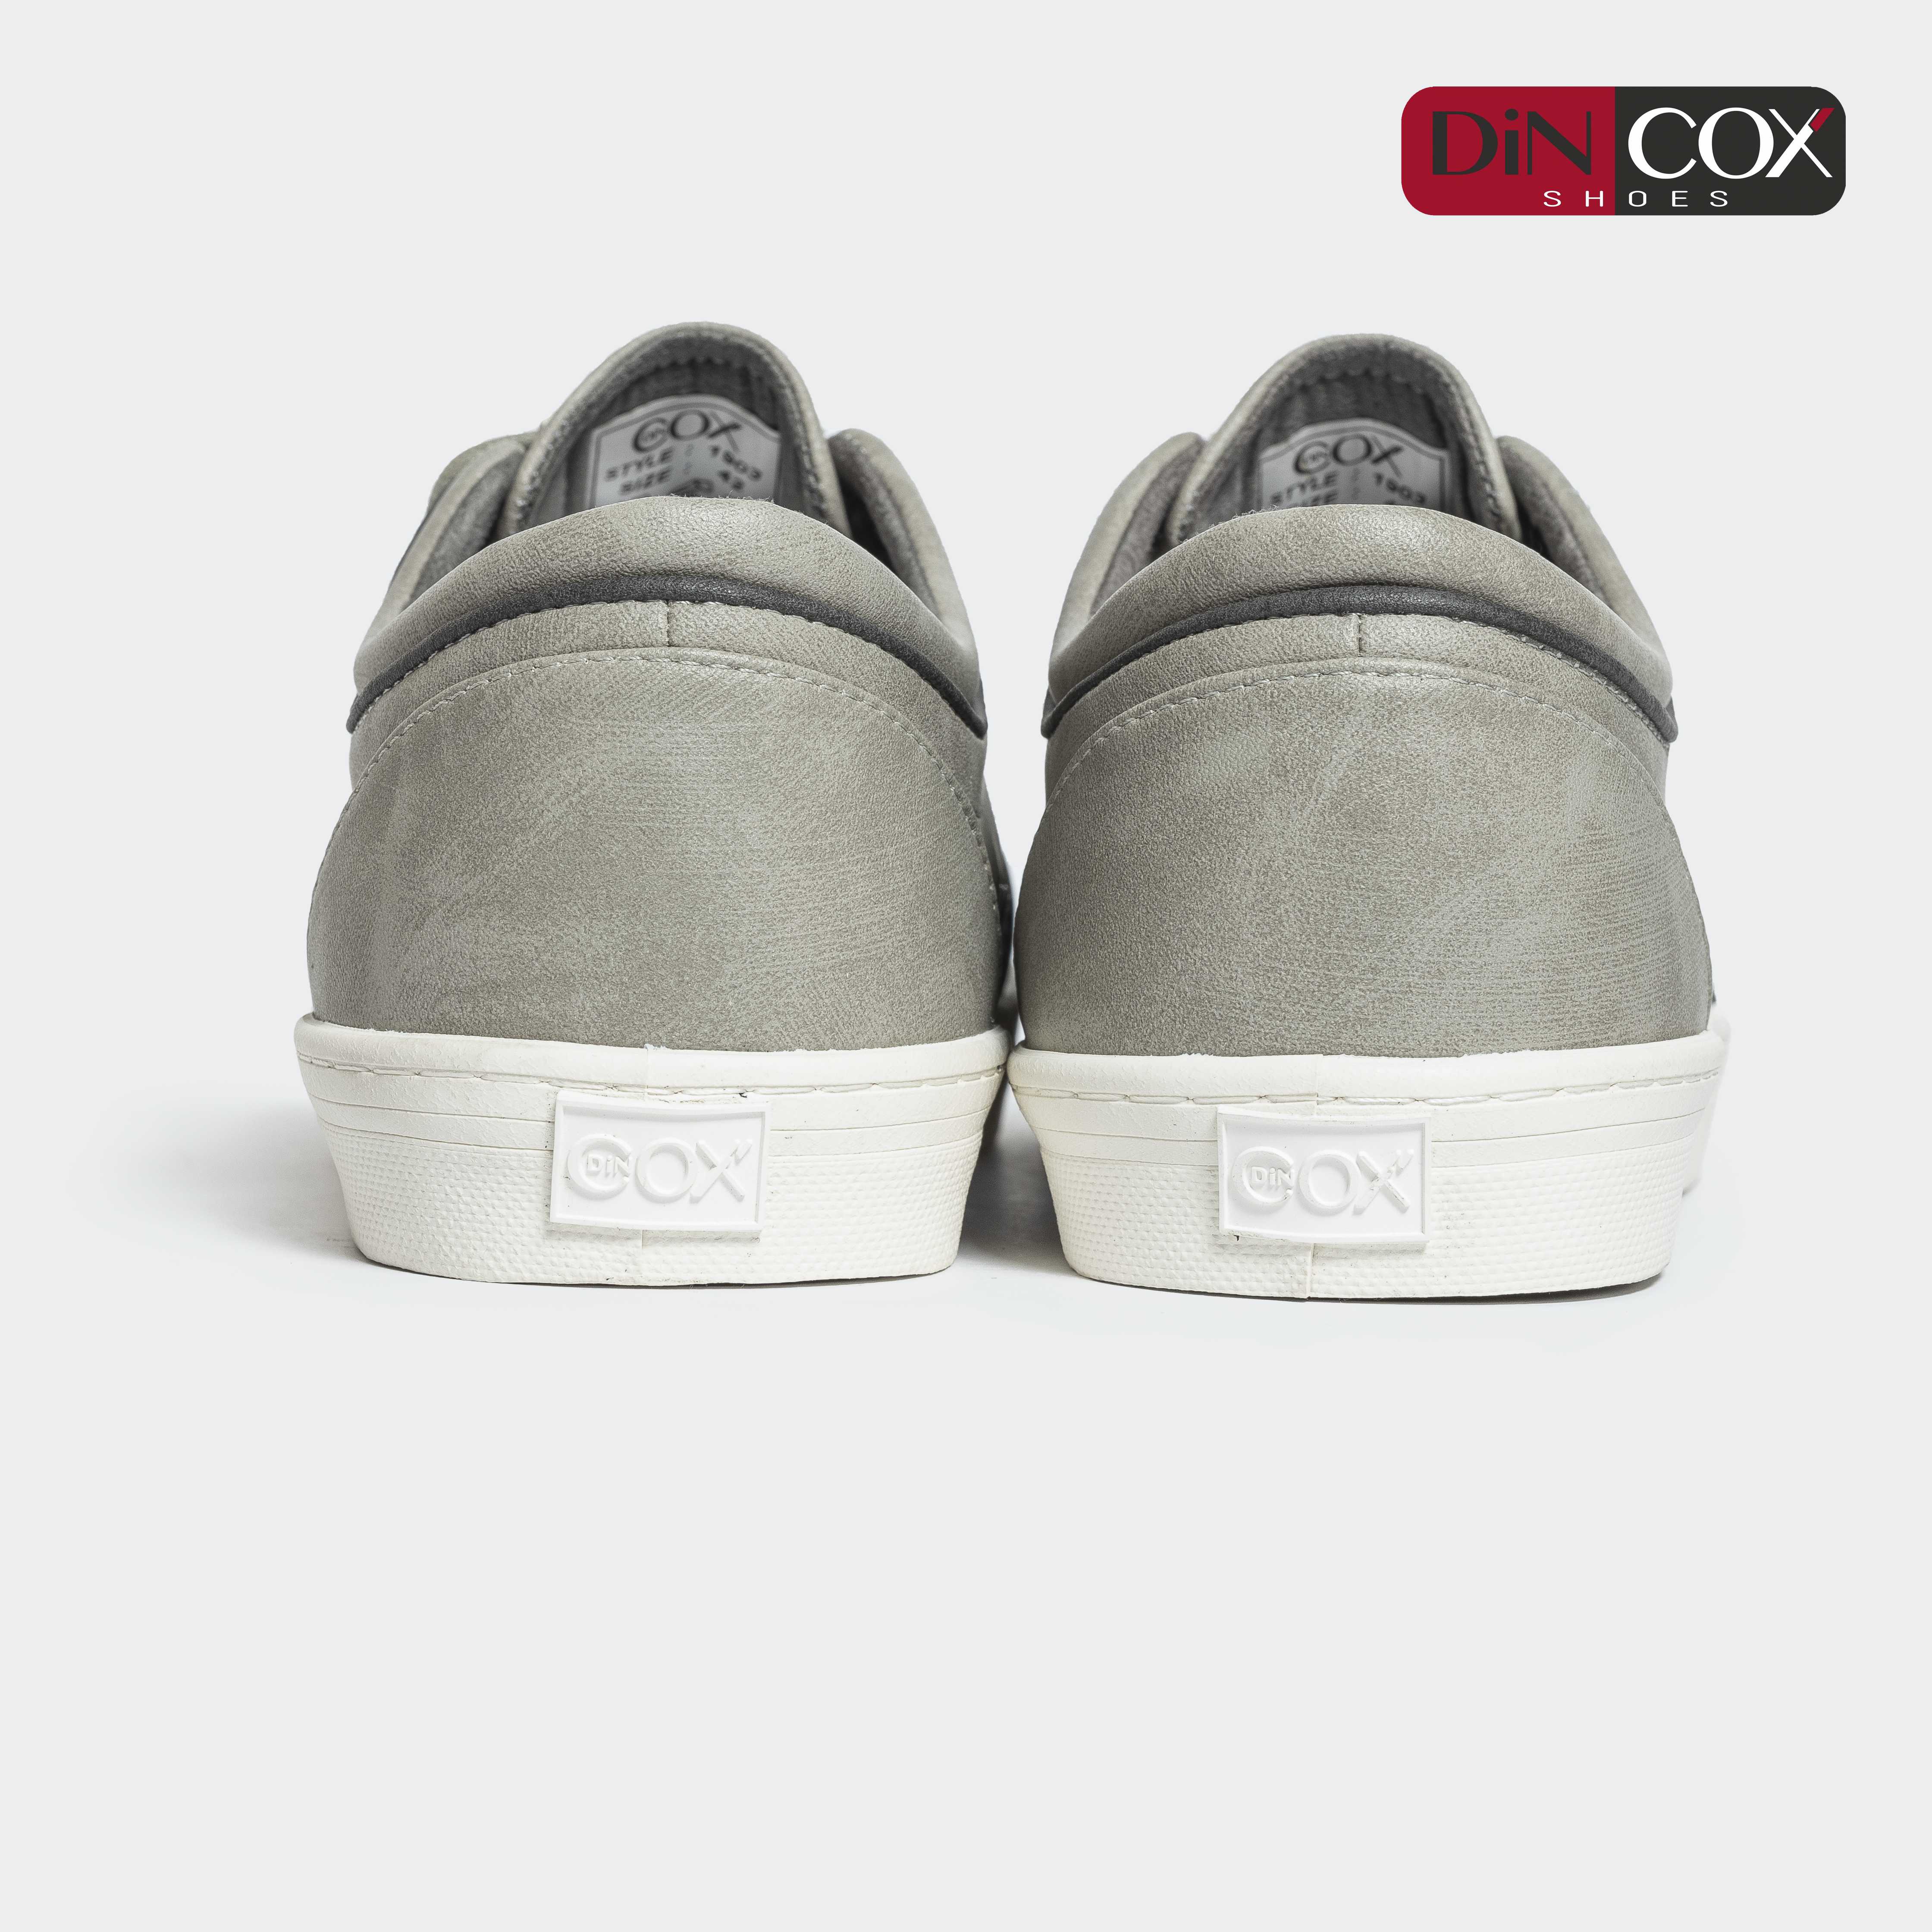 Giày Sneaker Nam C03 Grey Dincox